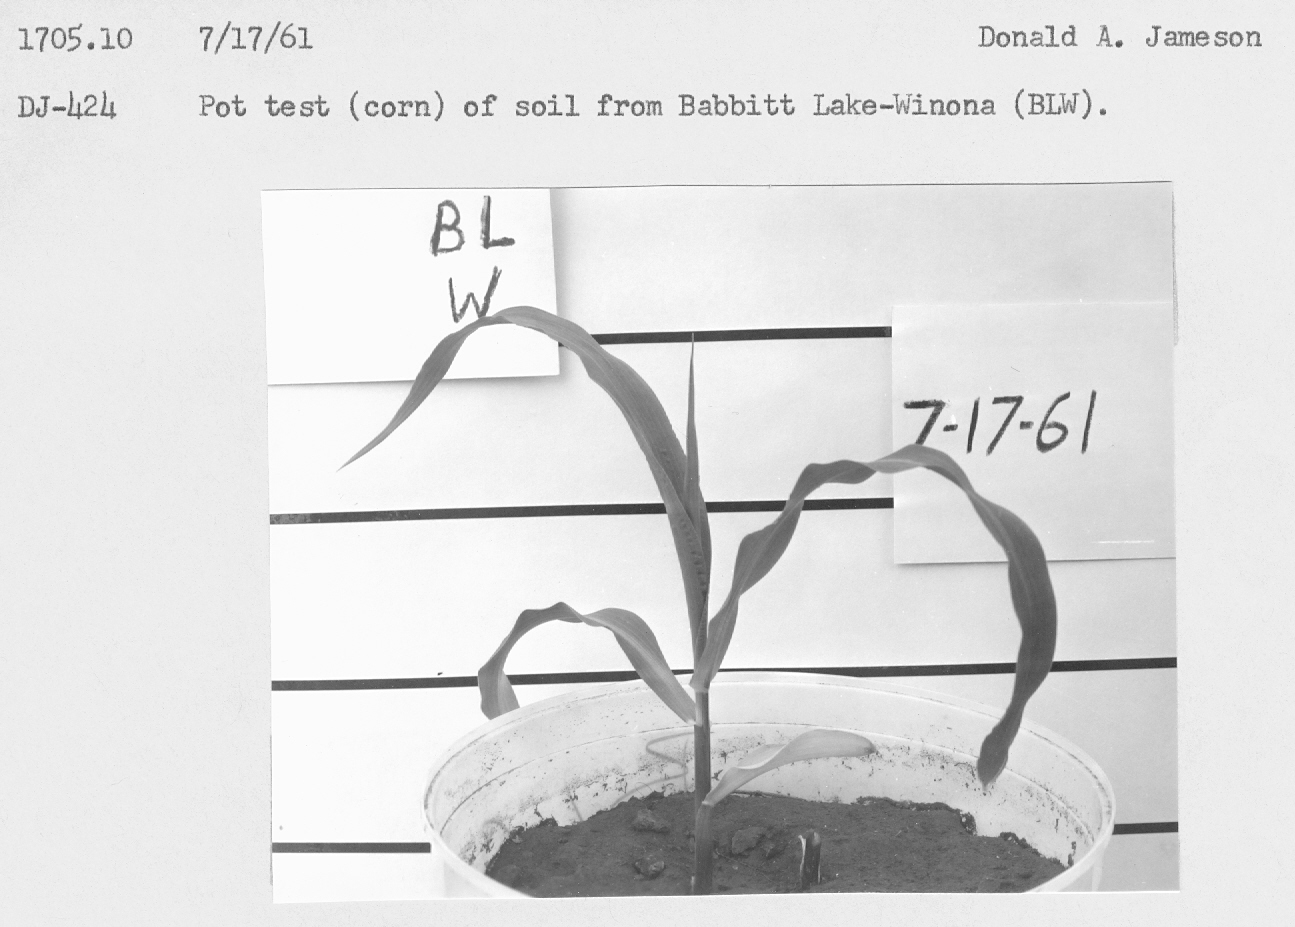 Pot test (corn) of soil from Babbit Lake Winona (BLW).